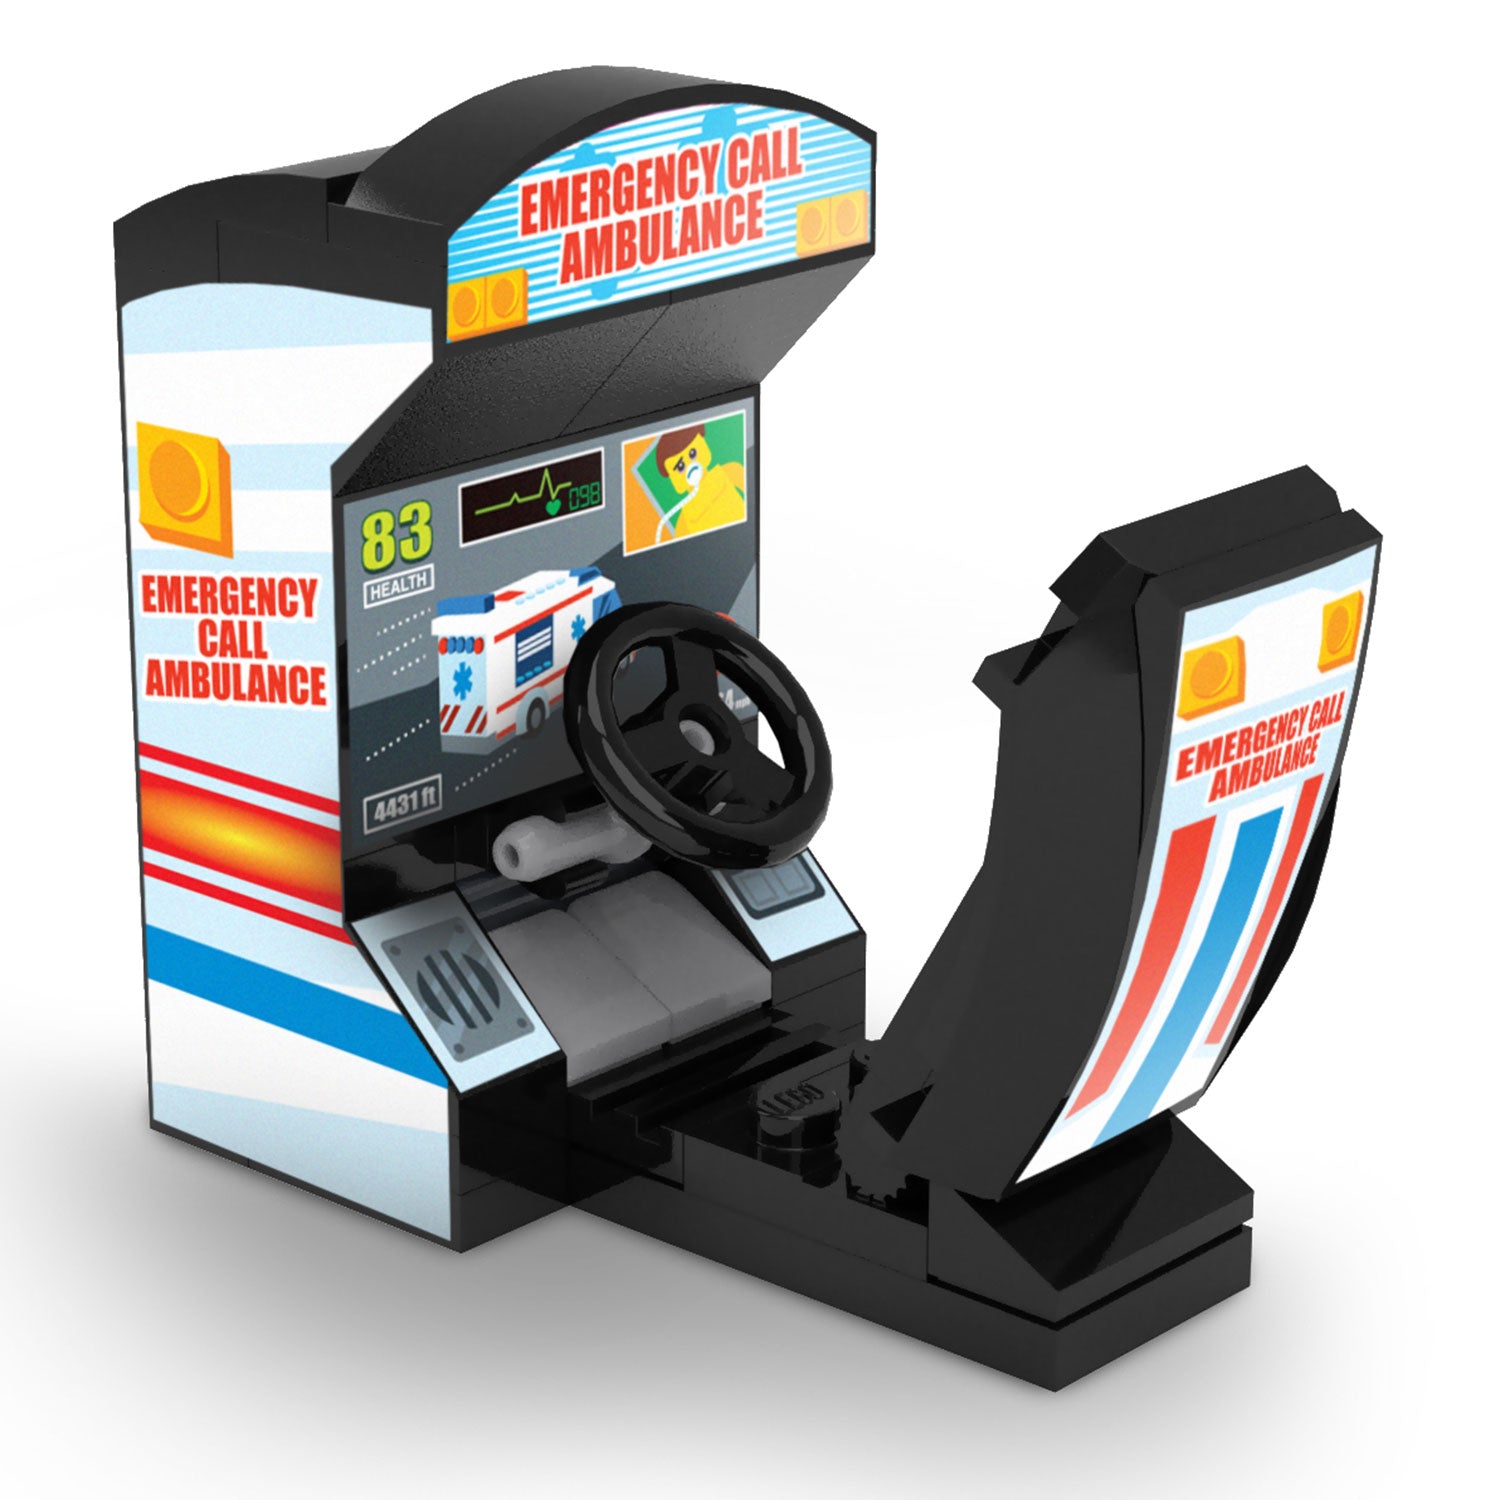 Emergency Call Ambulance - B3 Customs Arcade Racing Game made using LEGO parts